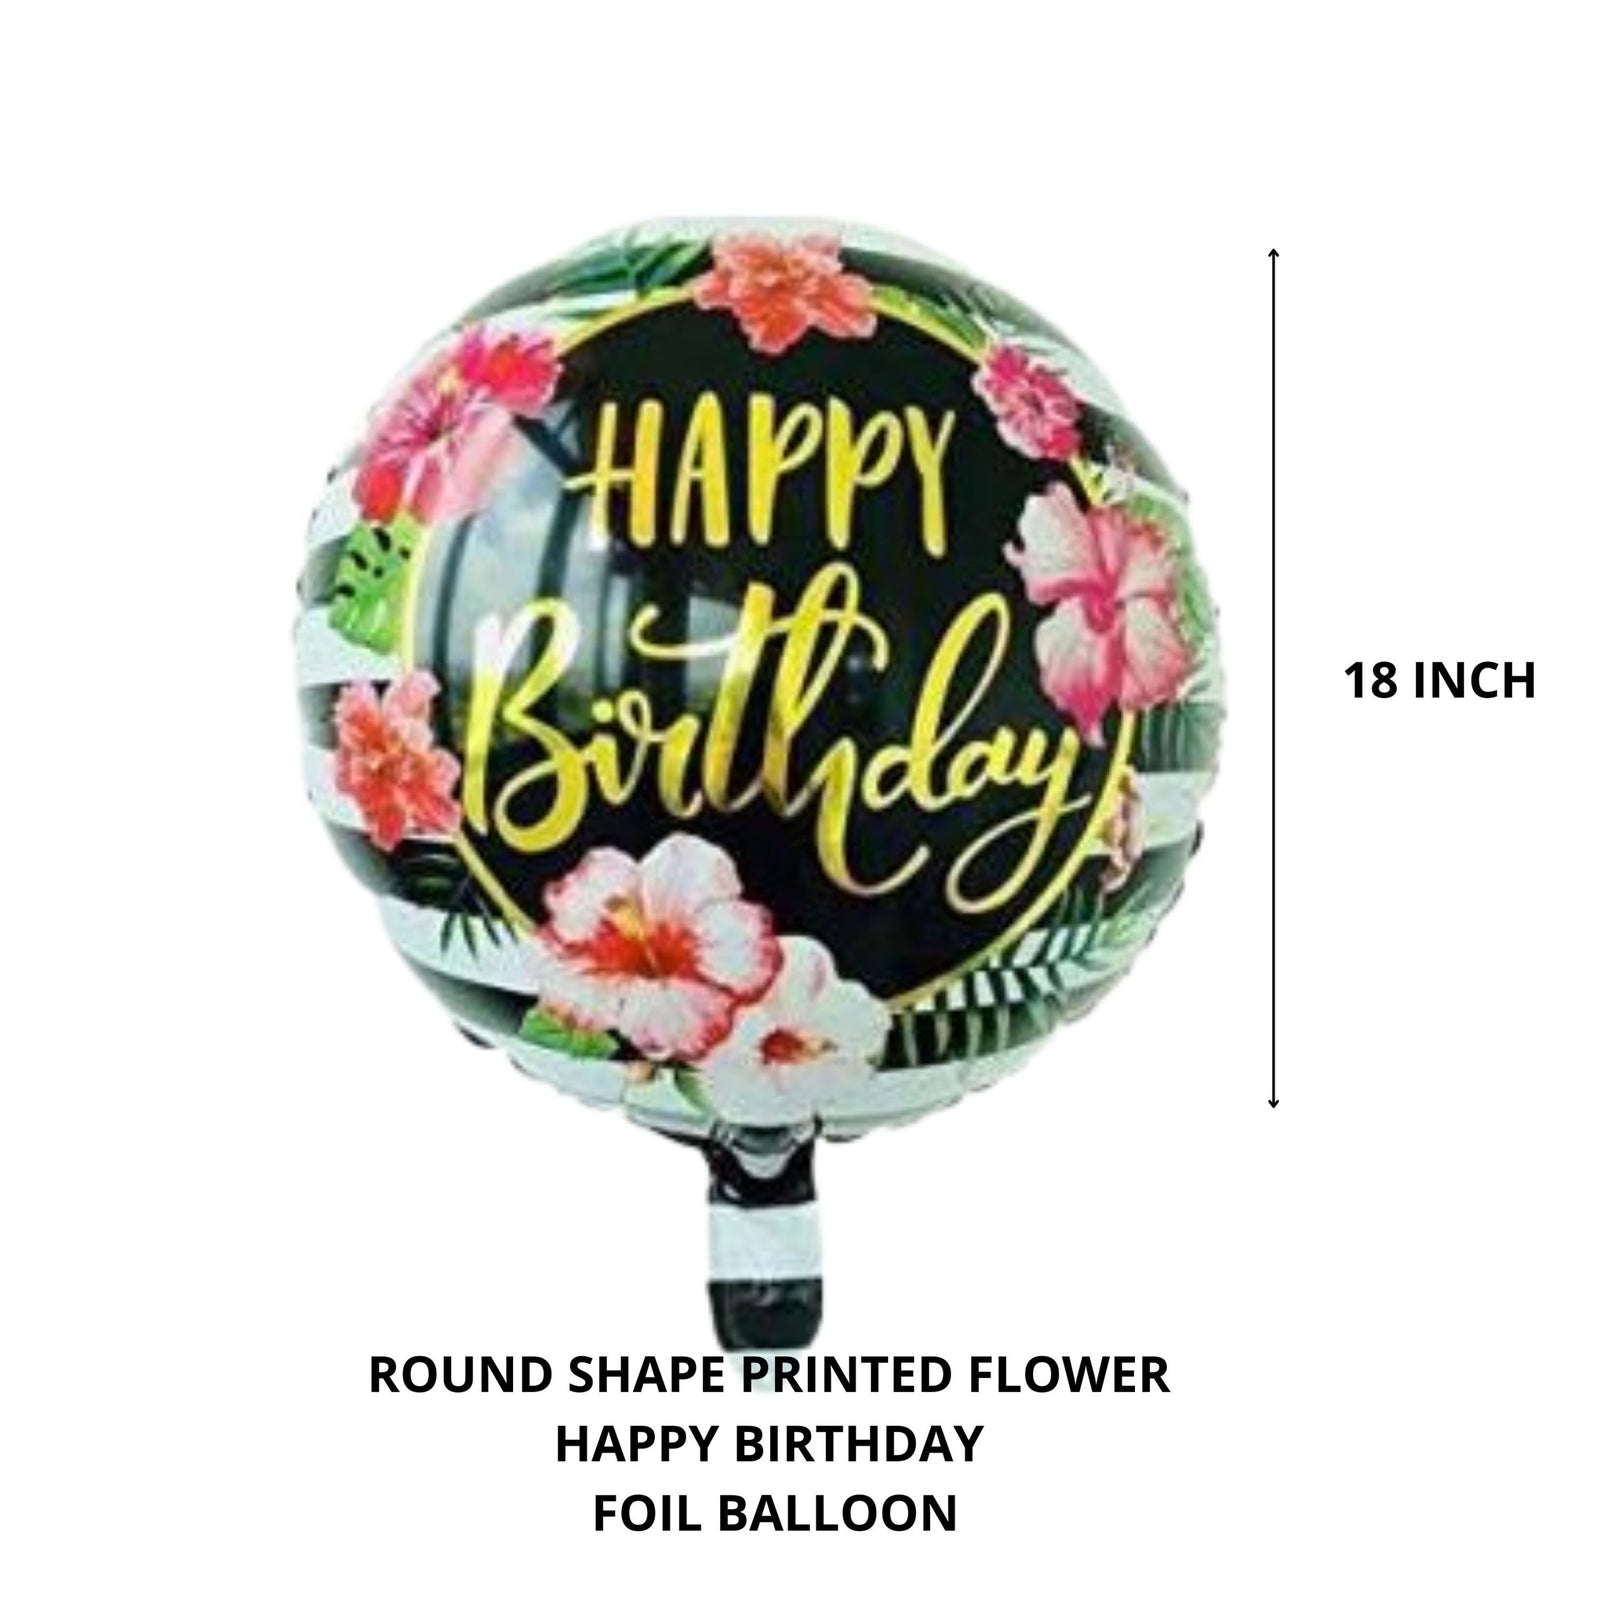 Printed Round Shape Flower Happy Birthday Foil Balloon